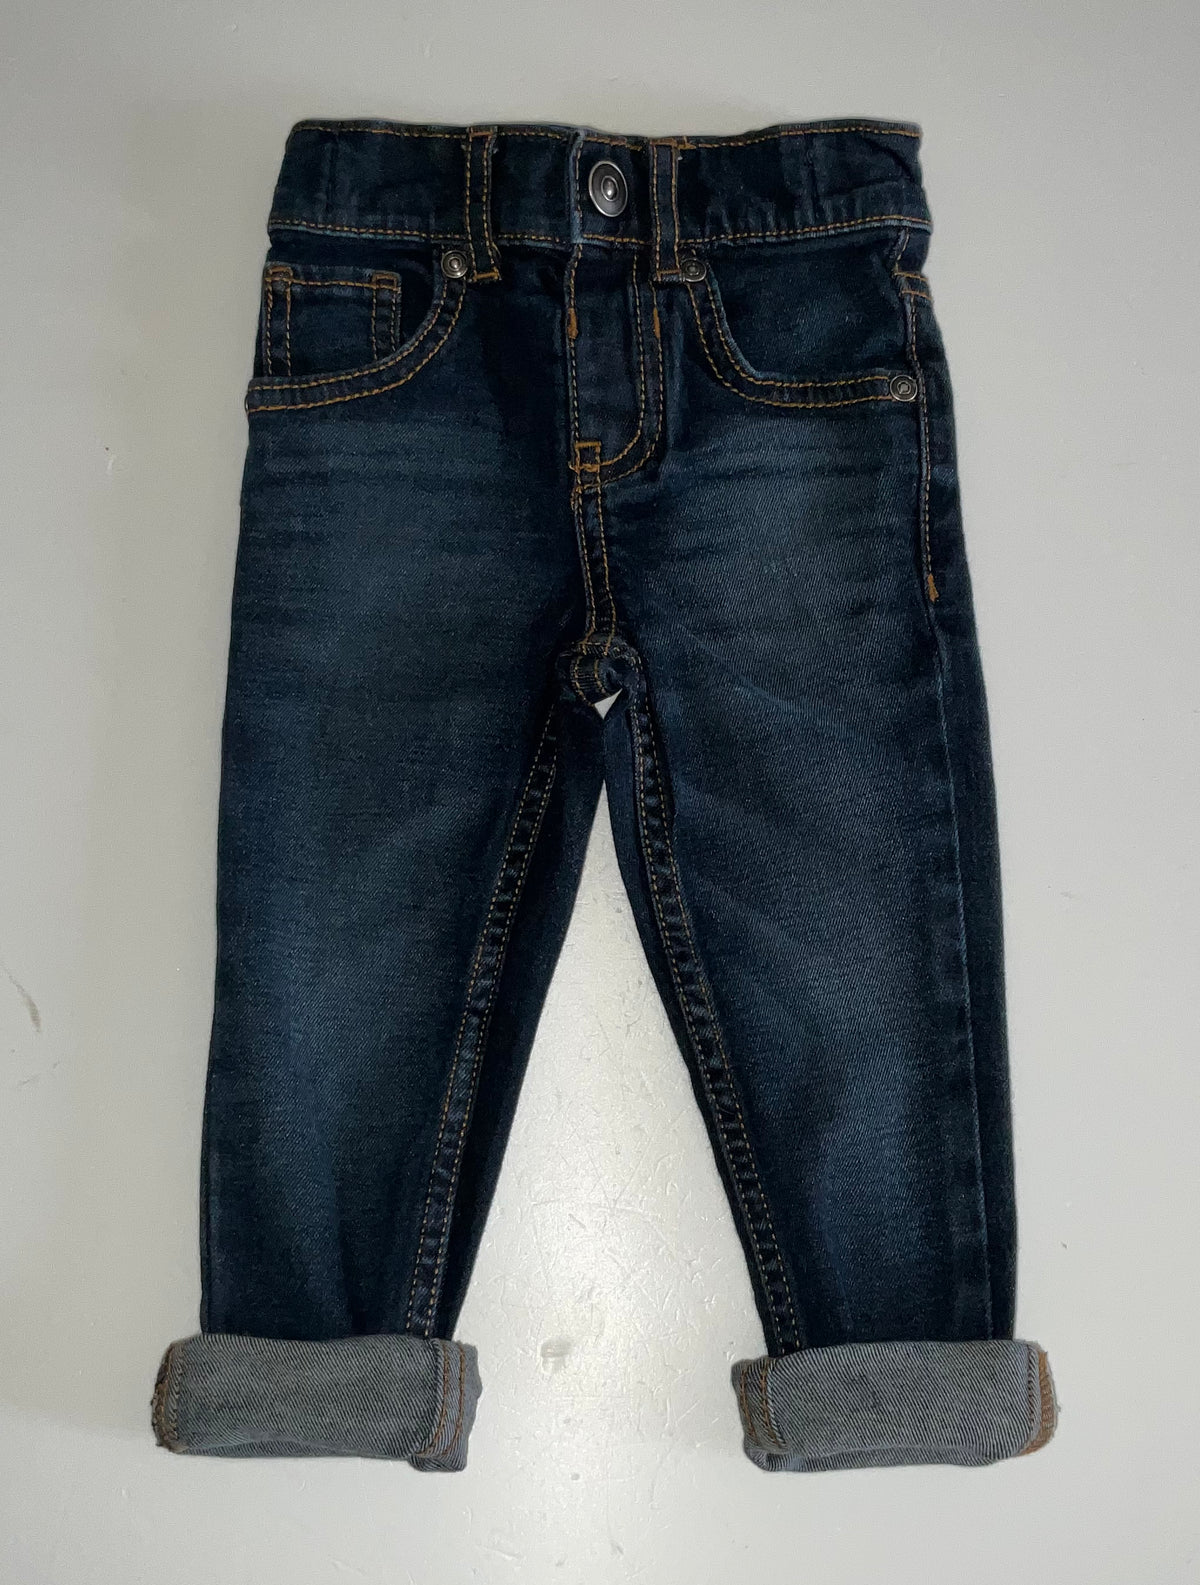 TU Skinny Jeans, Boys 9-12 Months